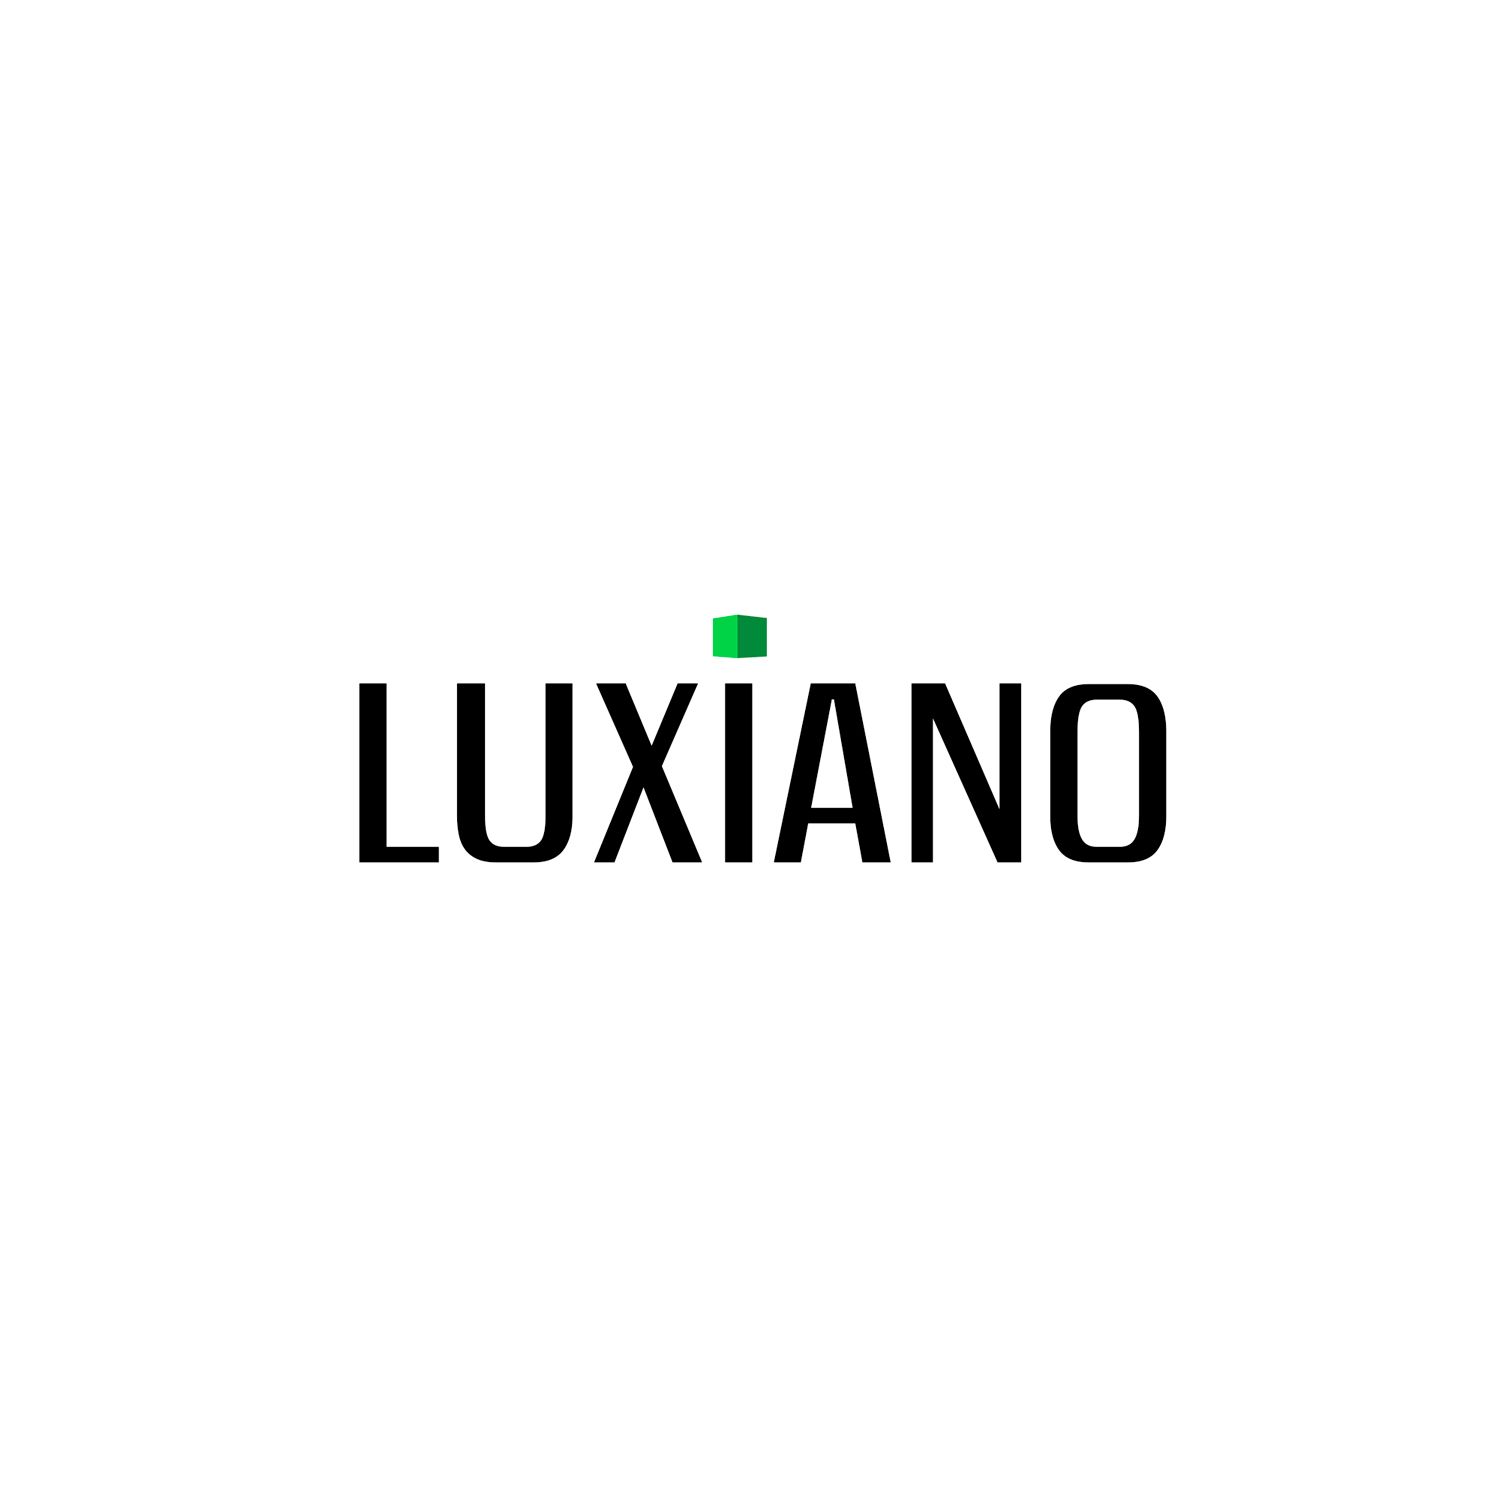 интернет магазин luxiano.ru - дизайнер epsylonart